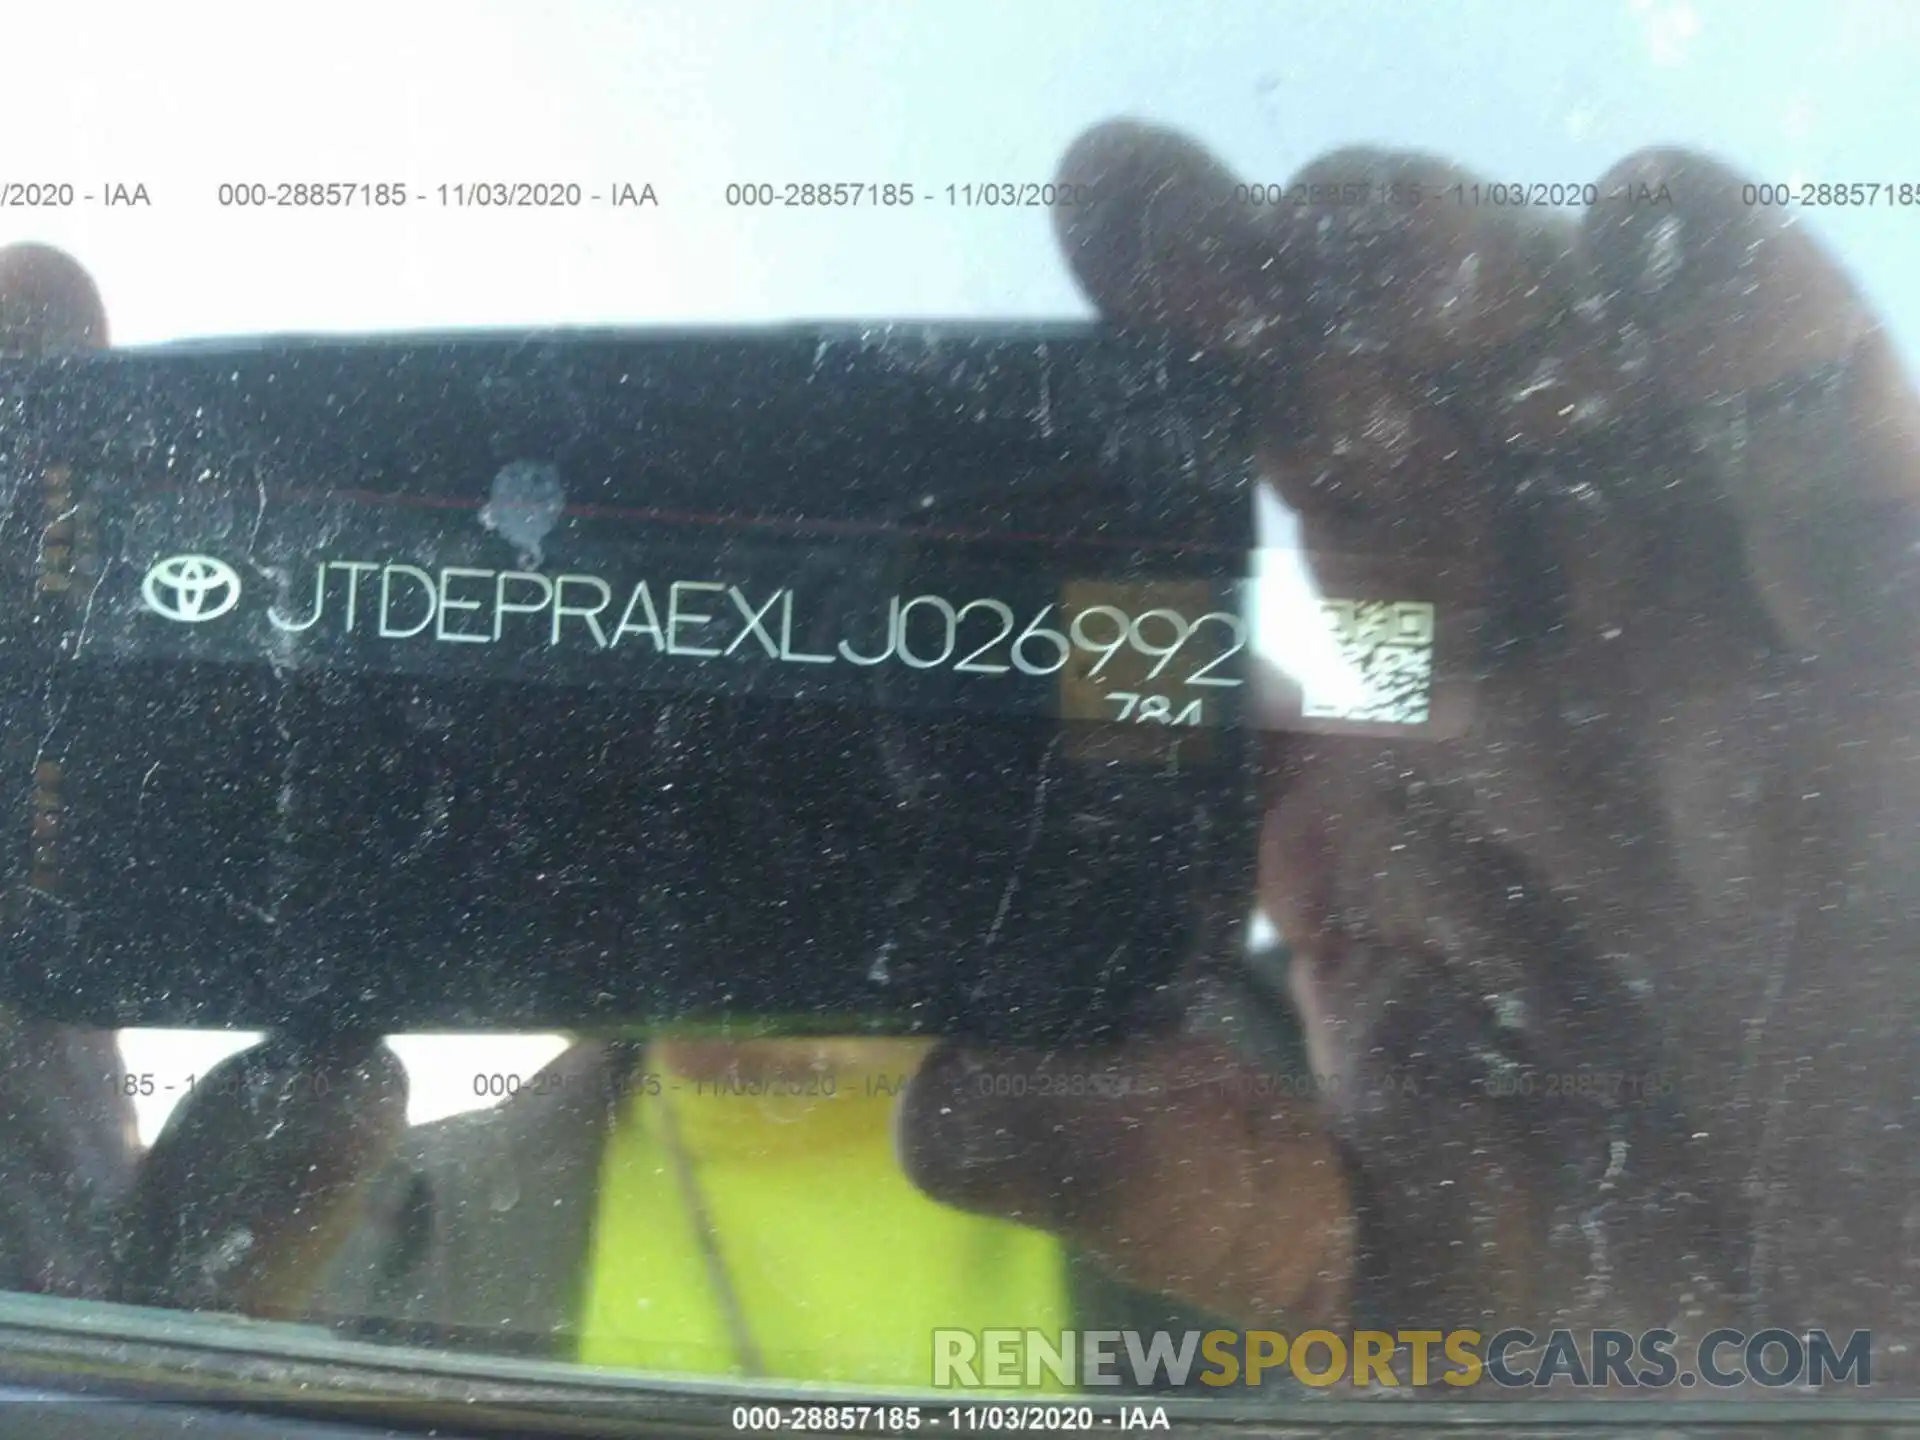 9 Photograph of a damaged car JTDEPRAEXLJ026992 TOYOTA COROLLA 2020